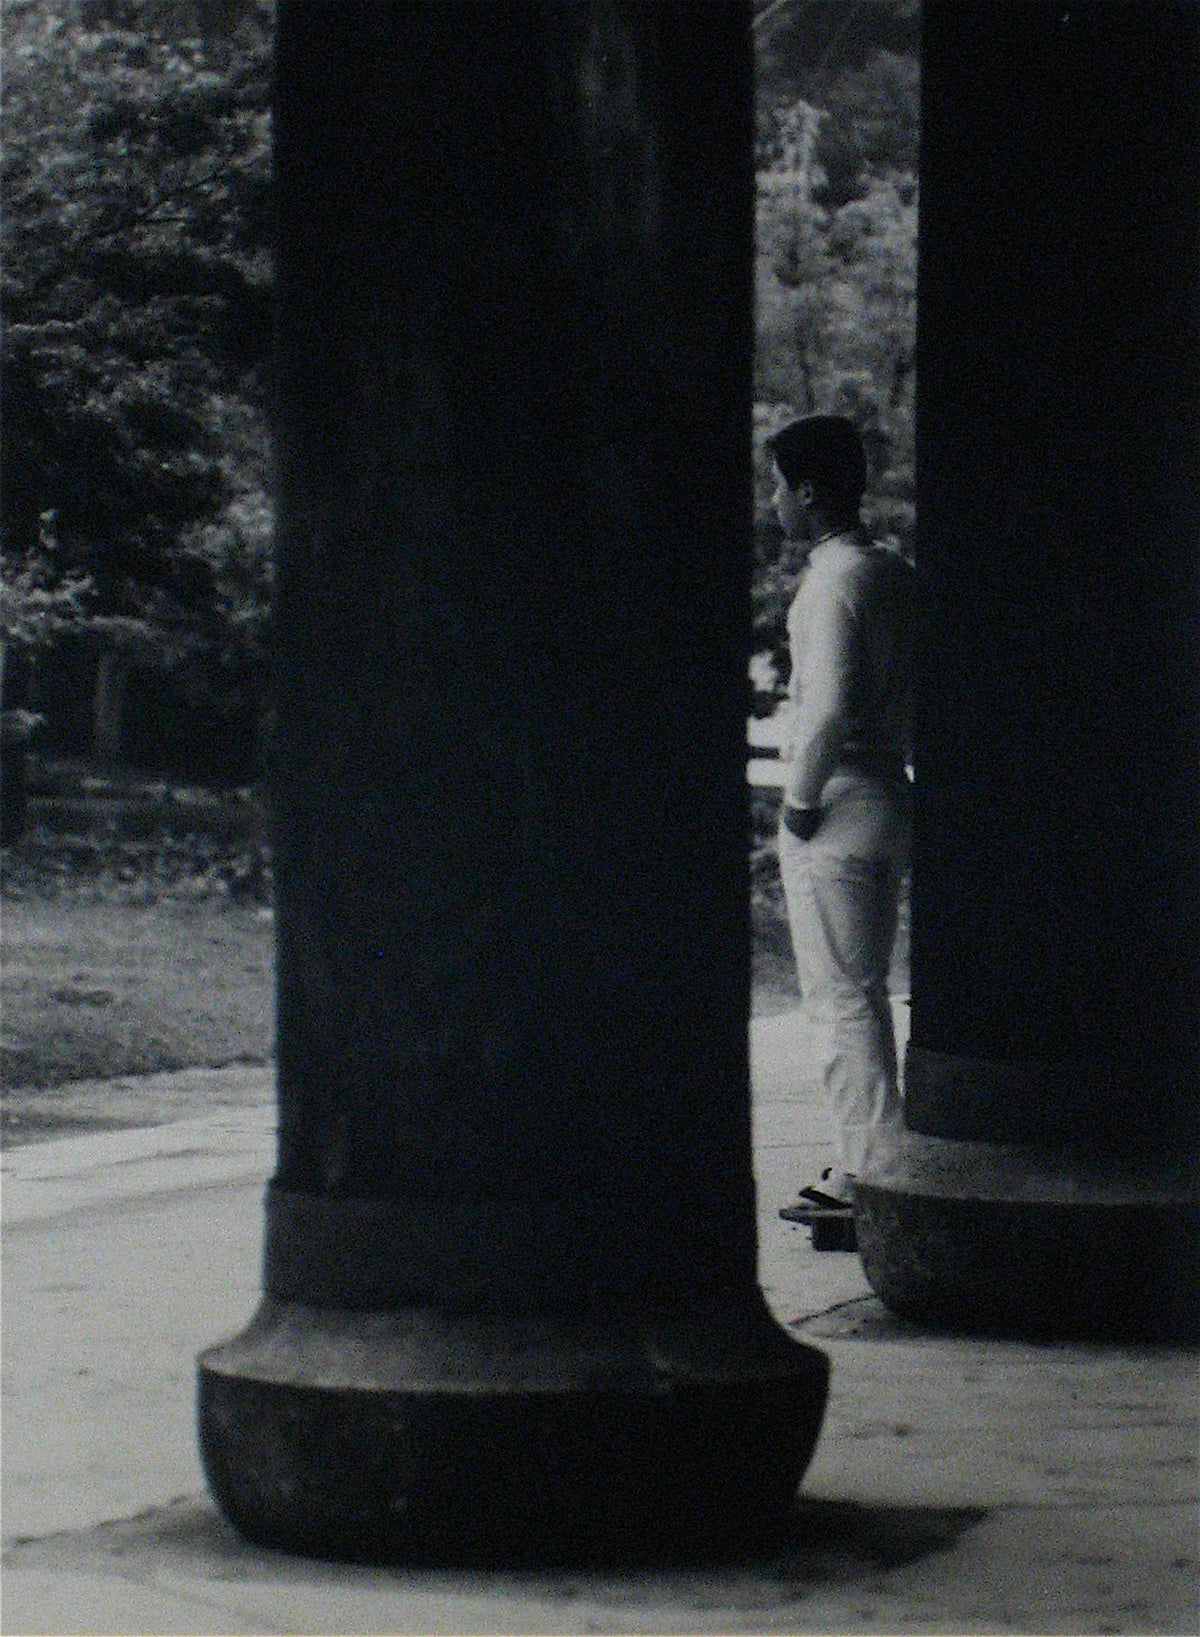 Man Between the Pilars &lt;br&gt;1960s Photograph &lt;br&gt;&lt;br&gt;#12263